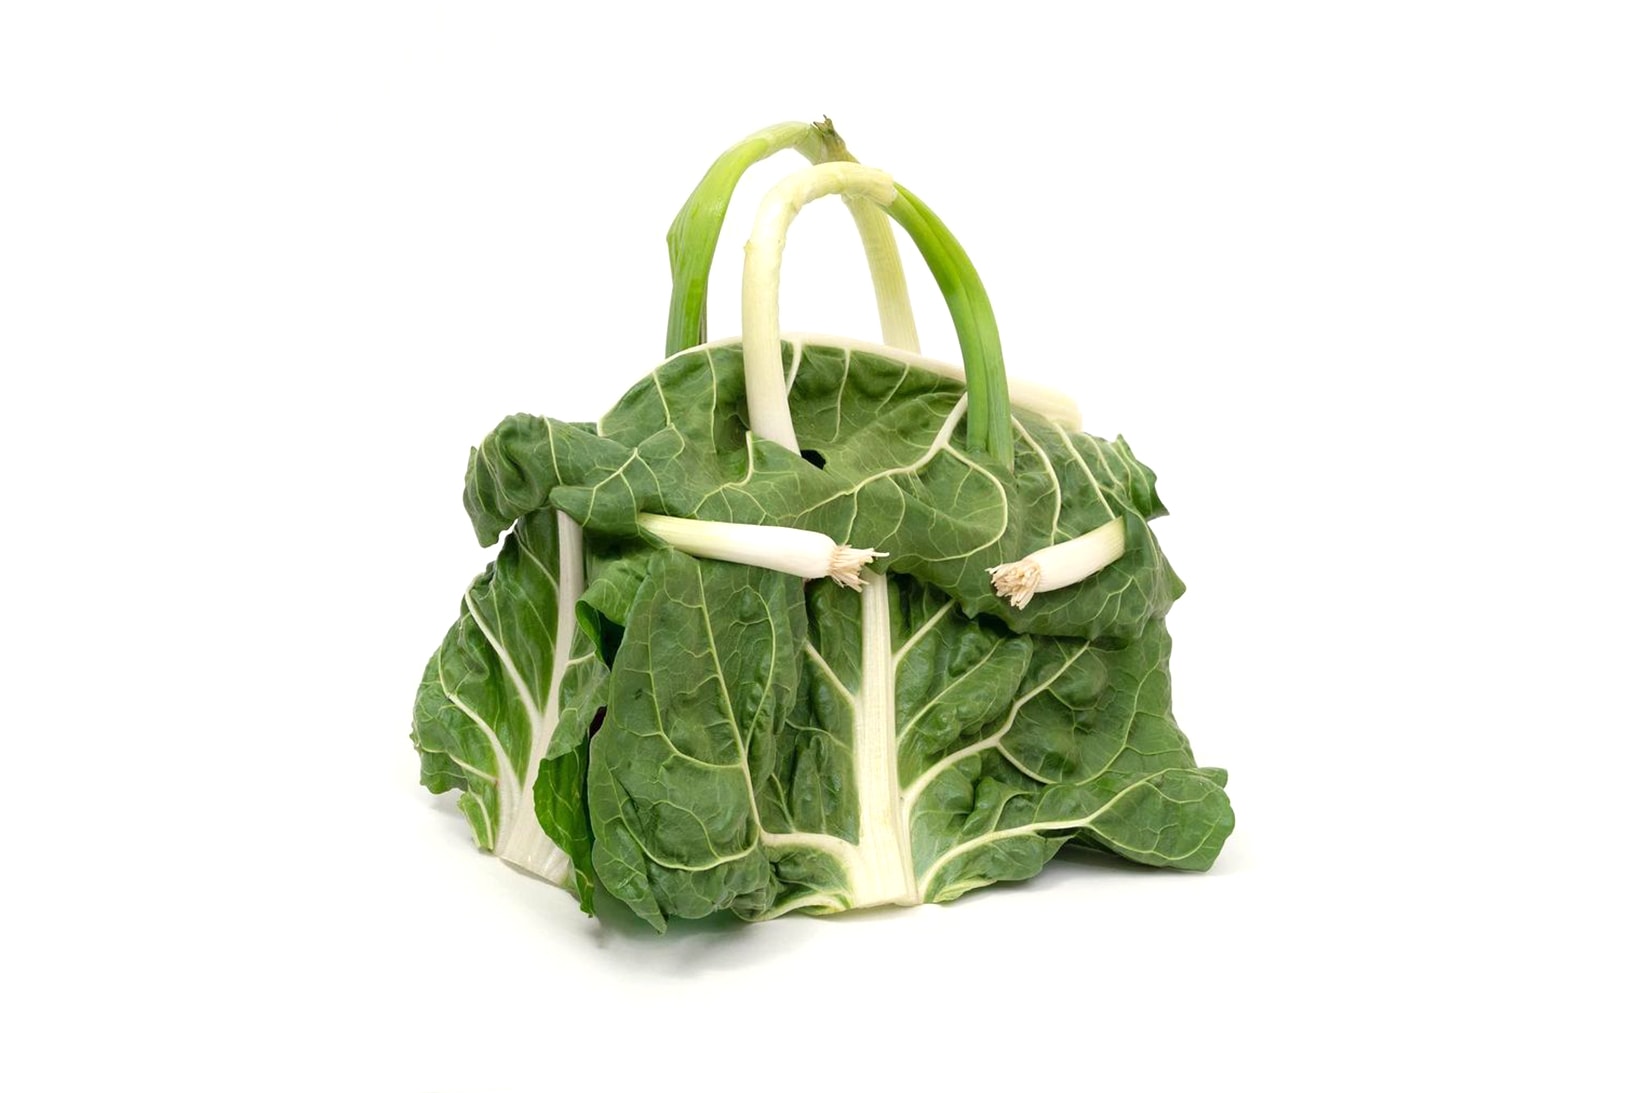 The new vegetable Hermes Birkin bag by artist Ben Denzer